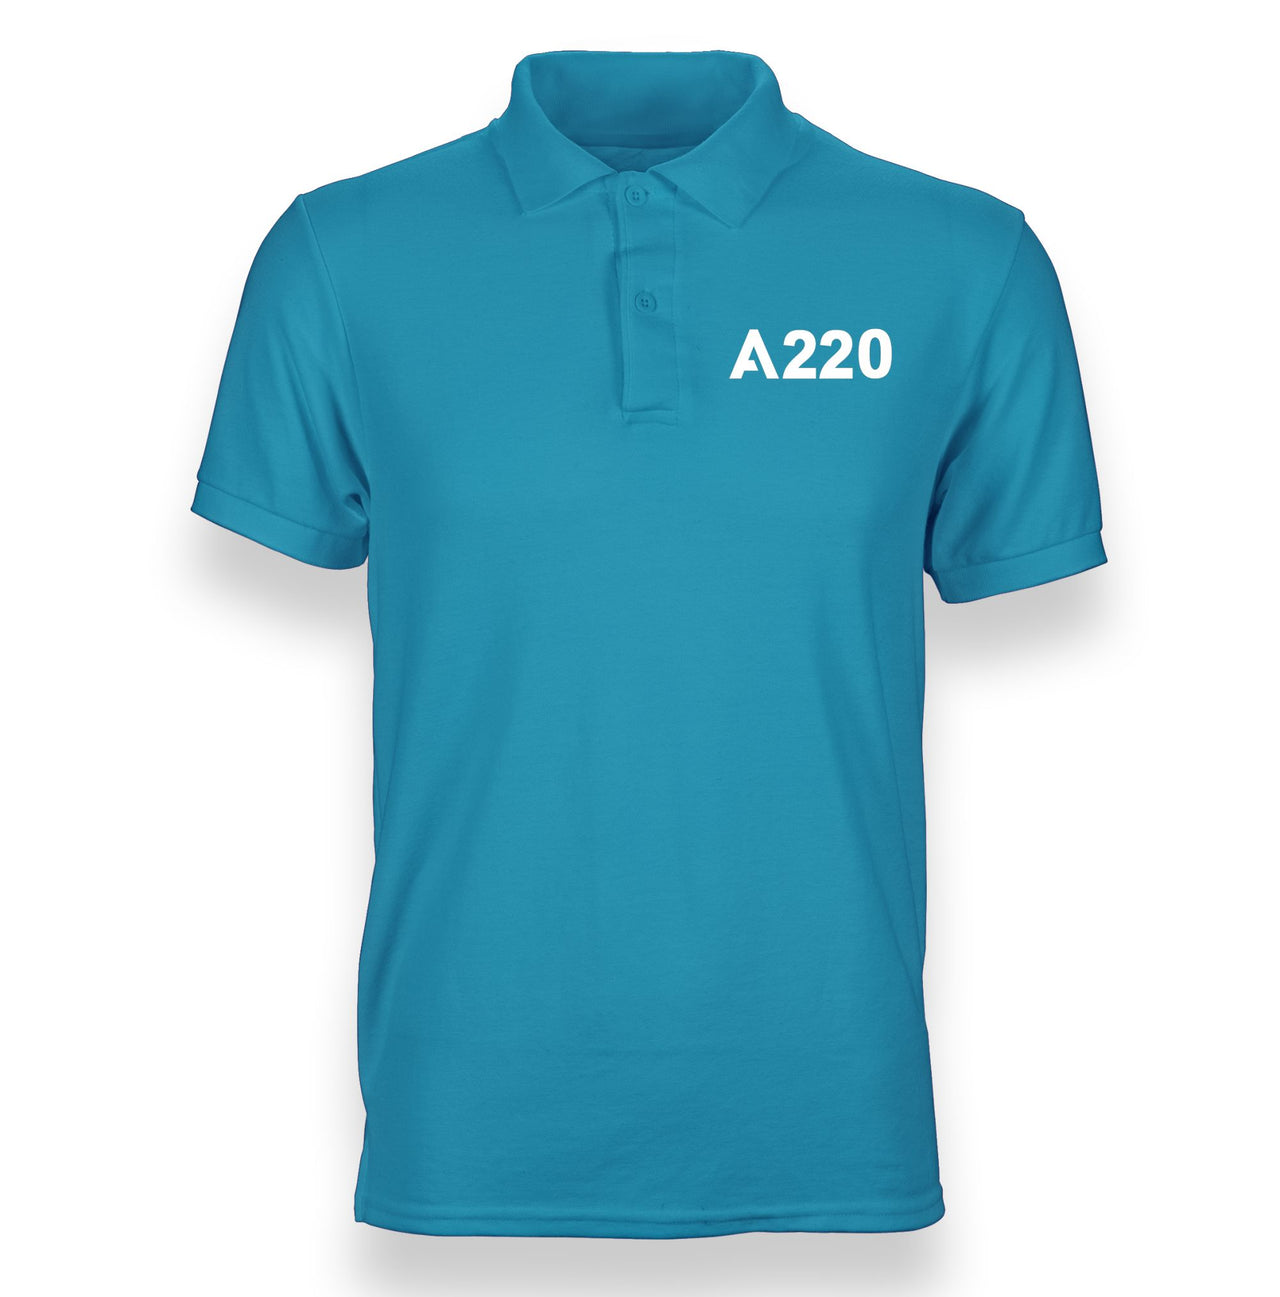 A220 Flat Text Designed "WOMEN" Polo T-Shirts